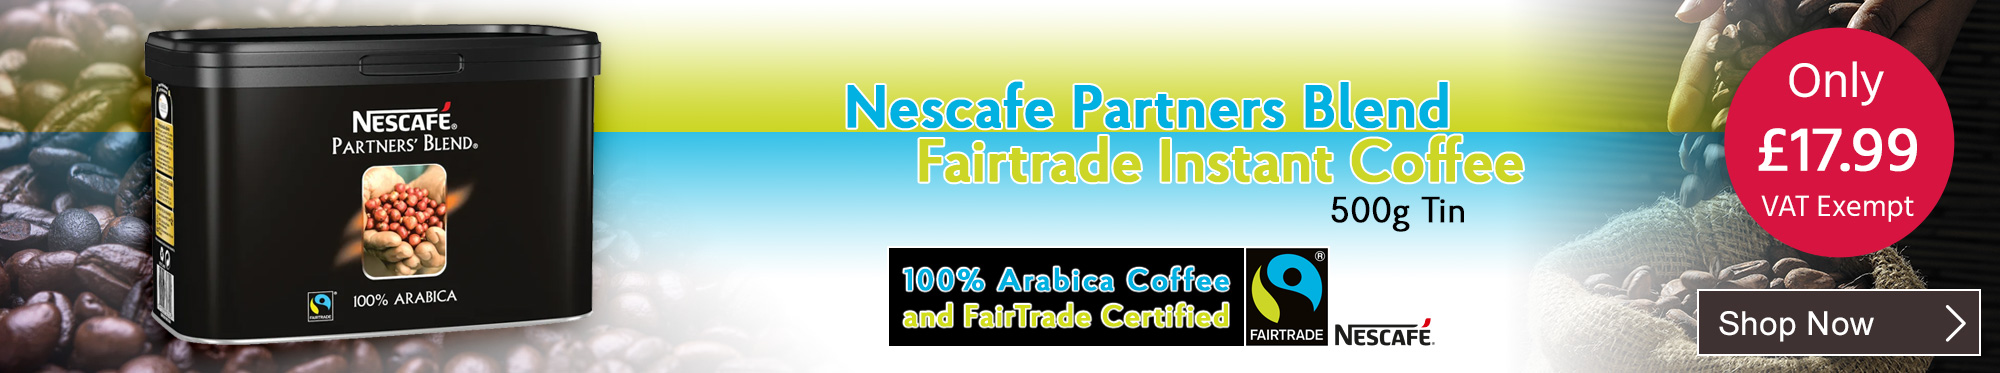 Nescafe Partners Blend Fairtrade Instant Coffee 500g Tin